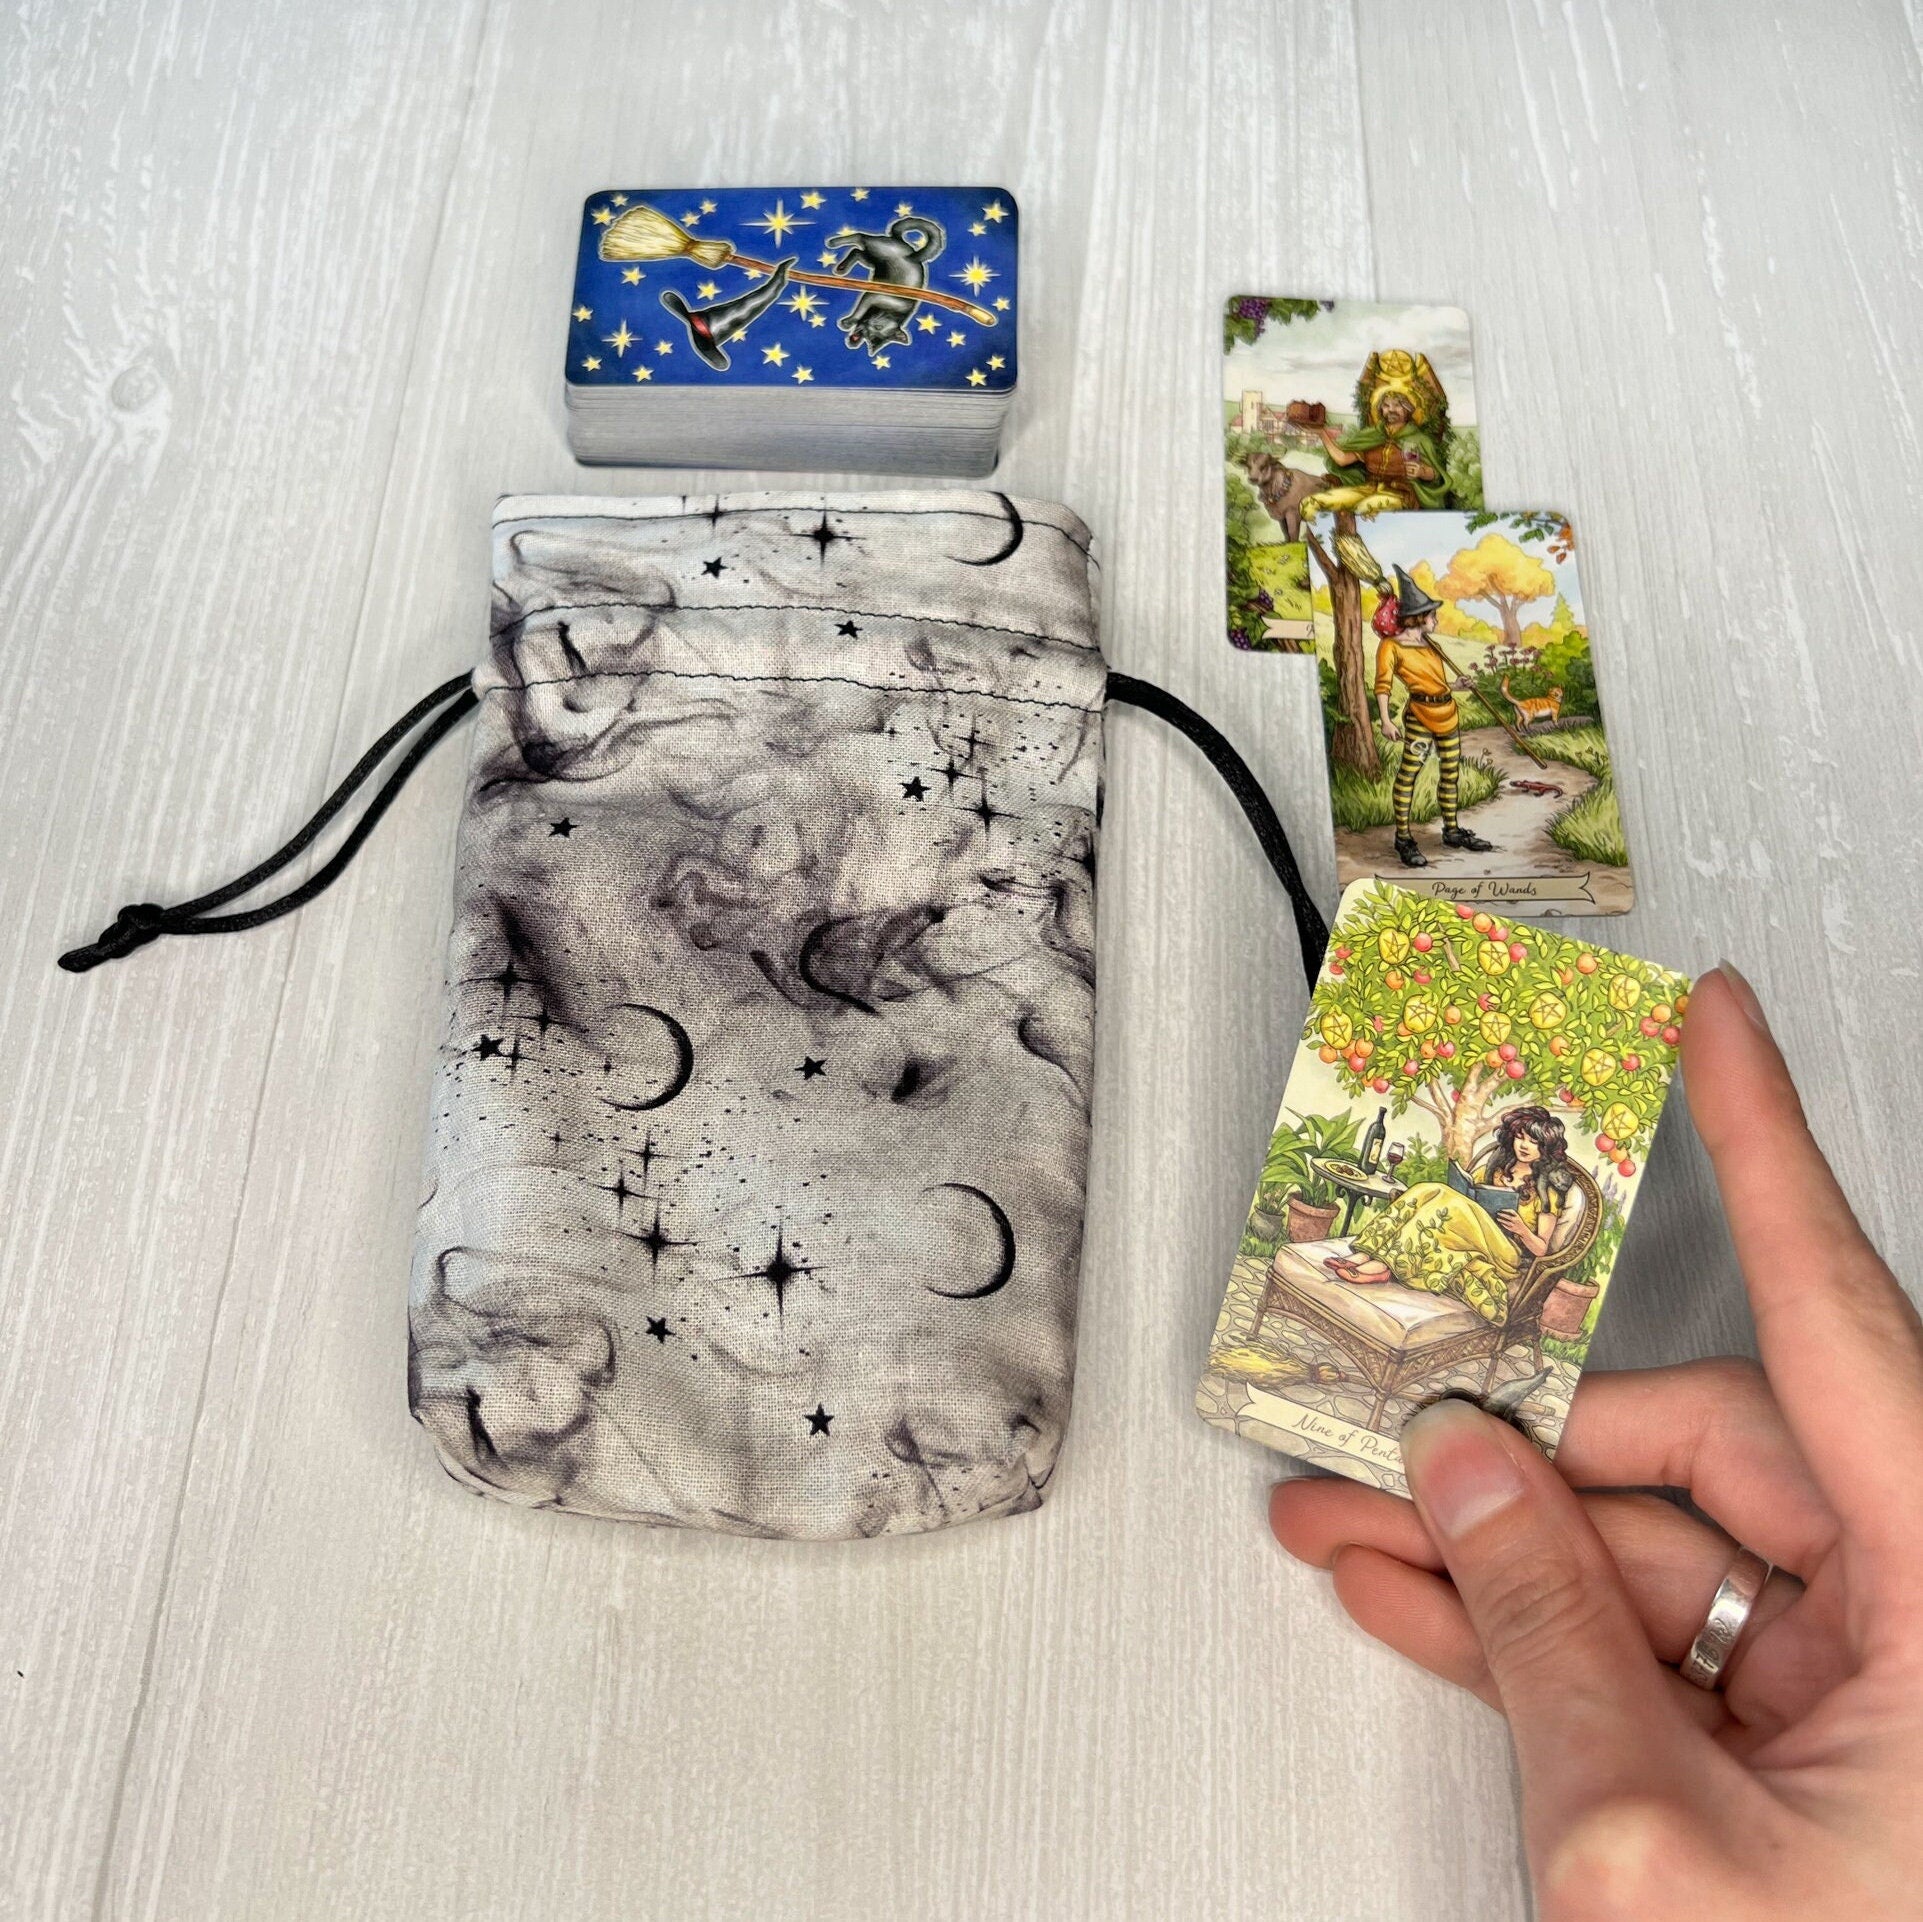 Moon Mini Tarot Deck Bag, Drawstring Pouch, Pocket Tarot, Dice Rune Bag, Witchcraft Wiccan Pagan Supplies Gifts, Halloween Divination Tools